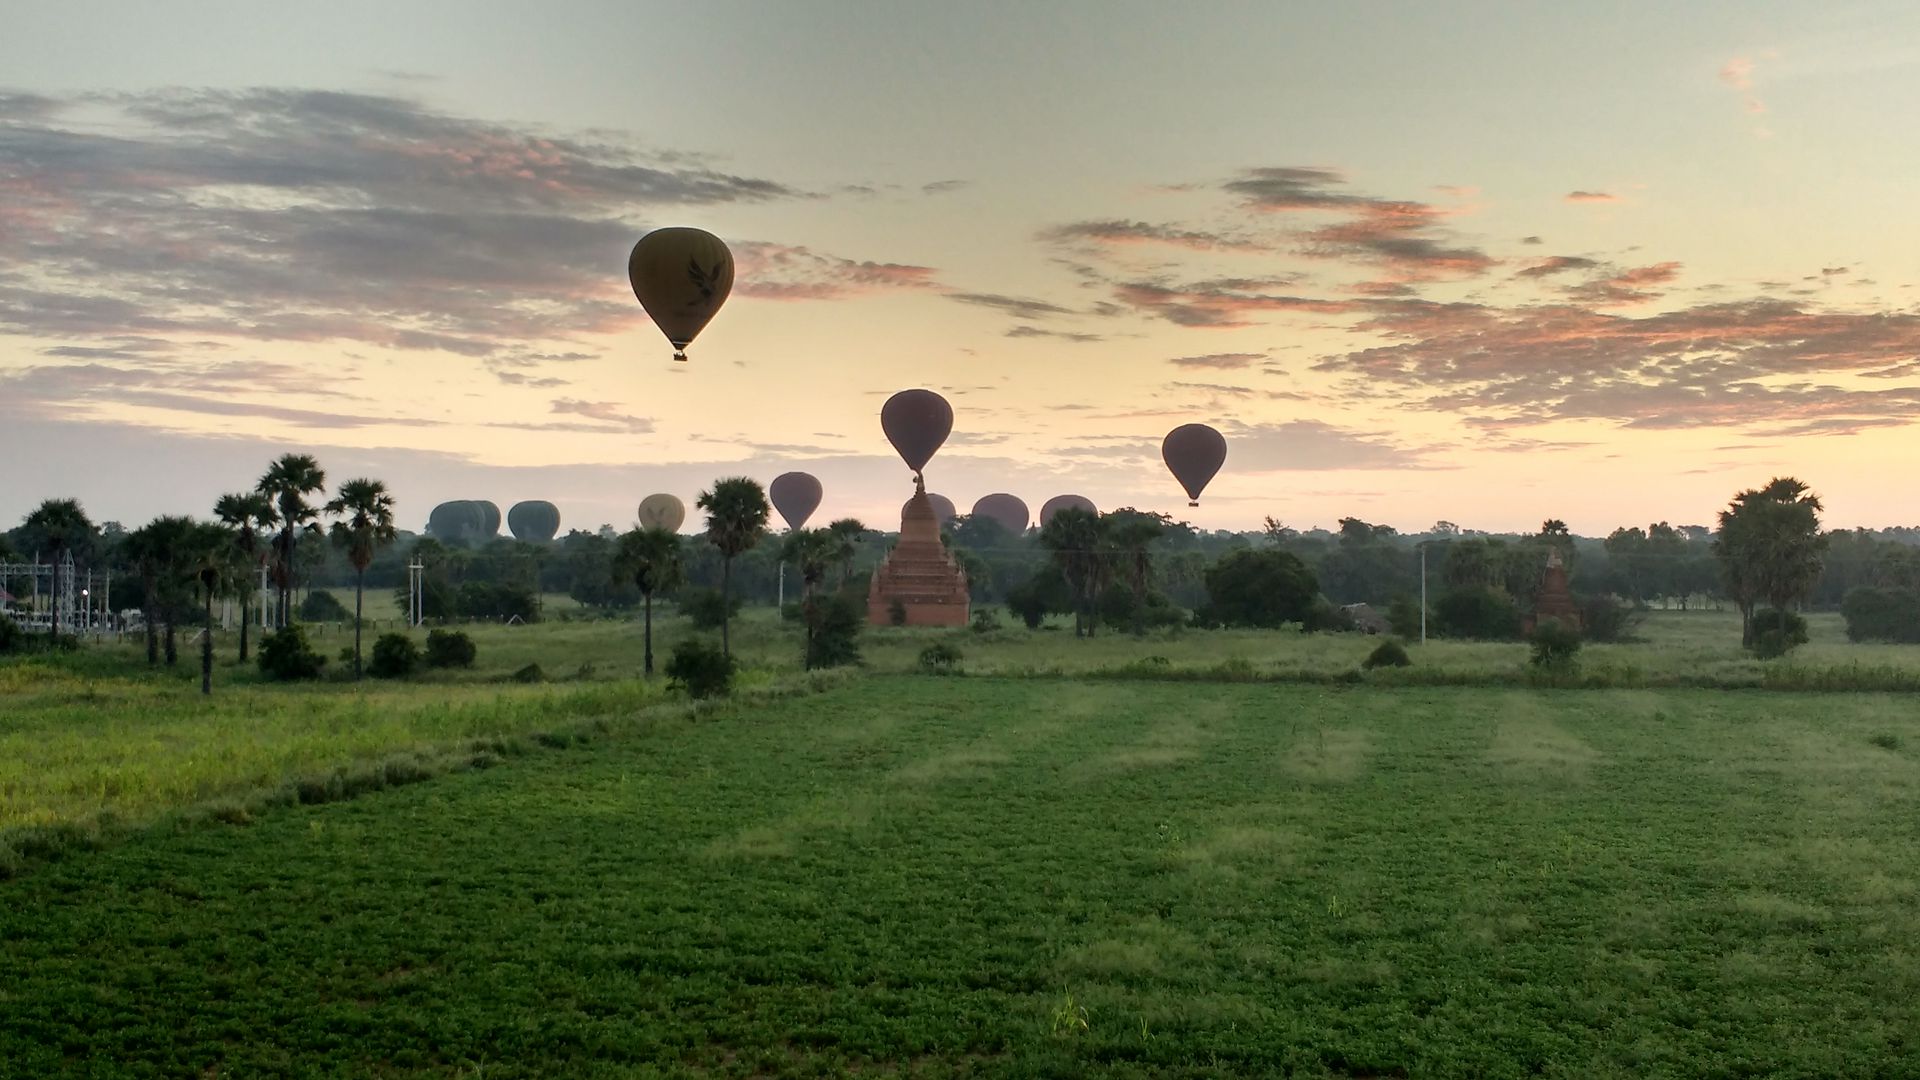 Bagan: Realmente majestuoso